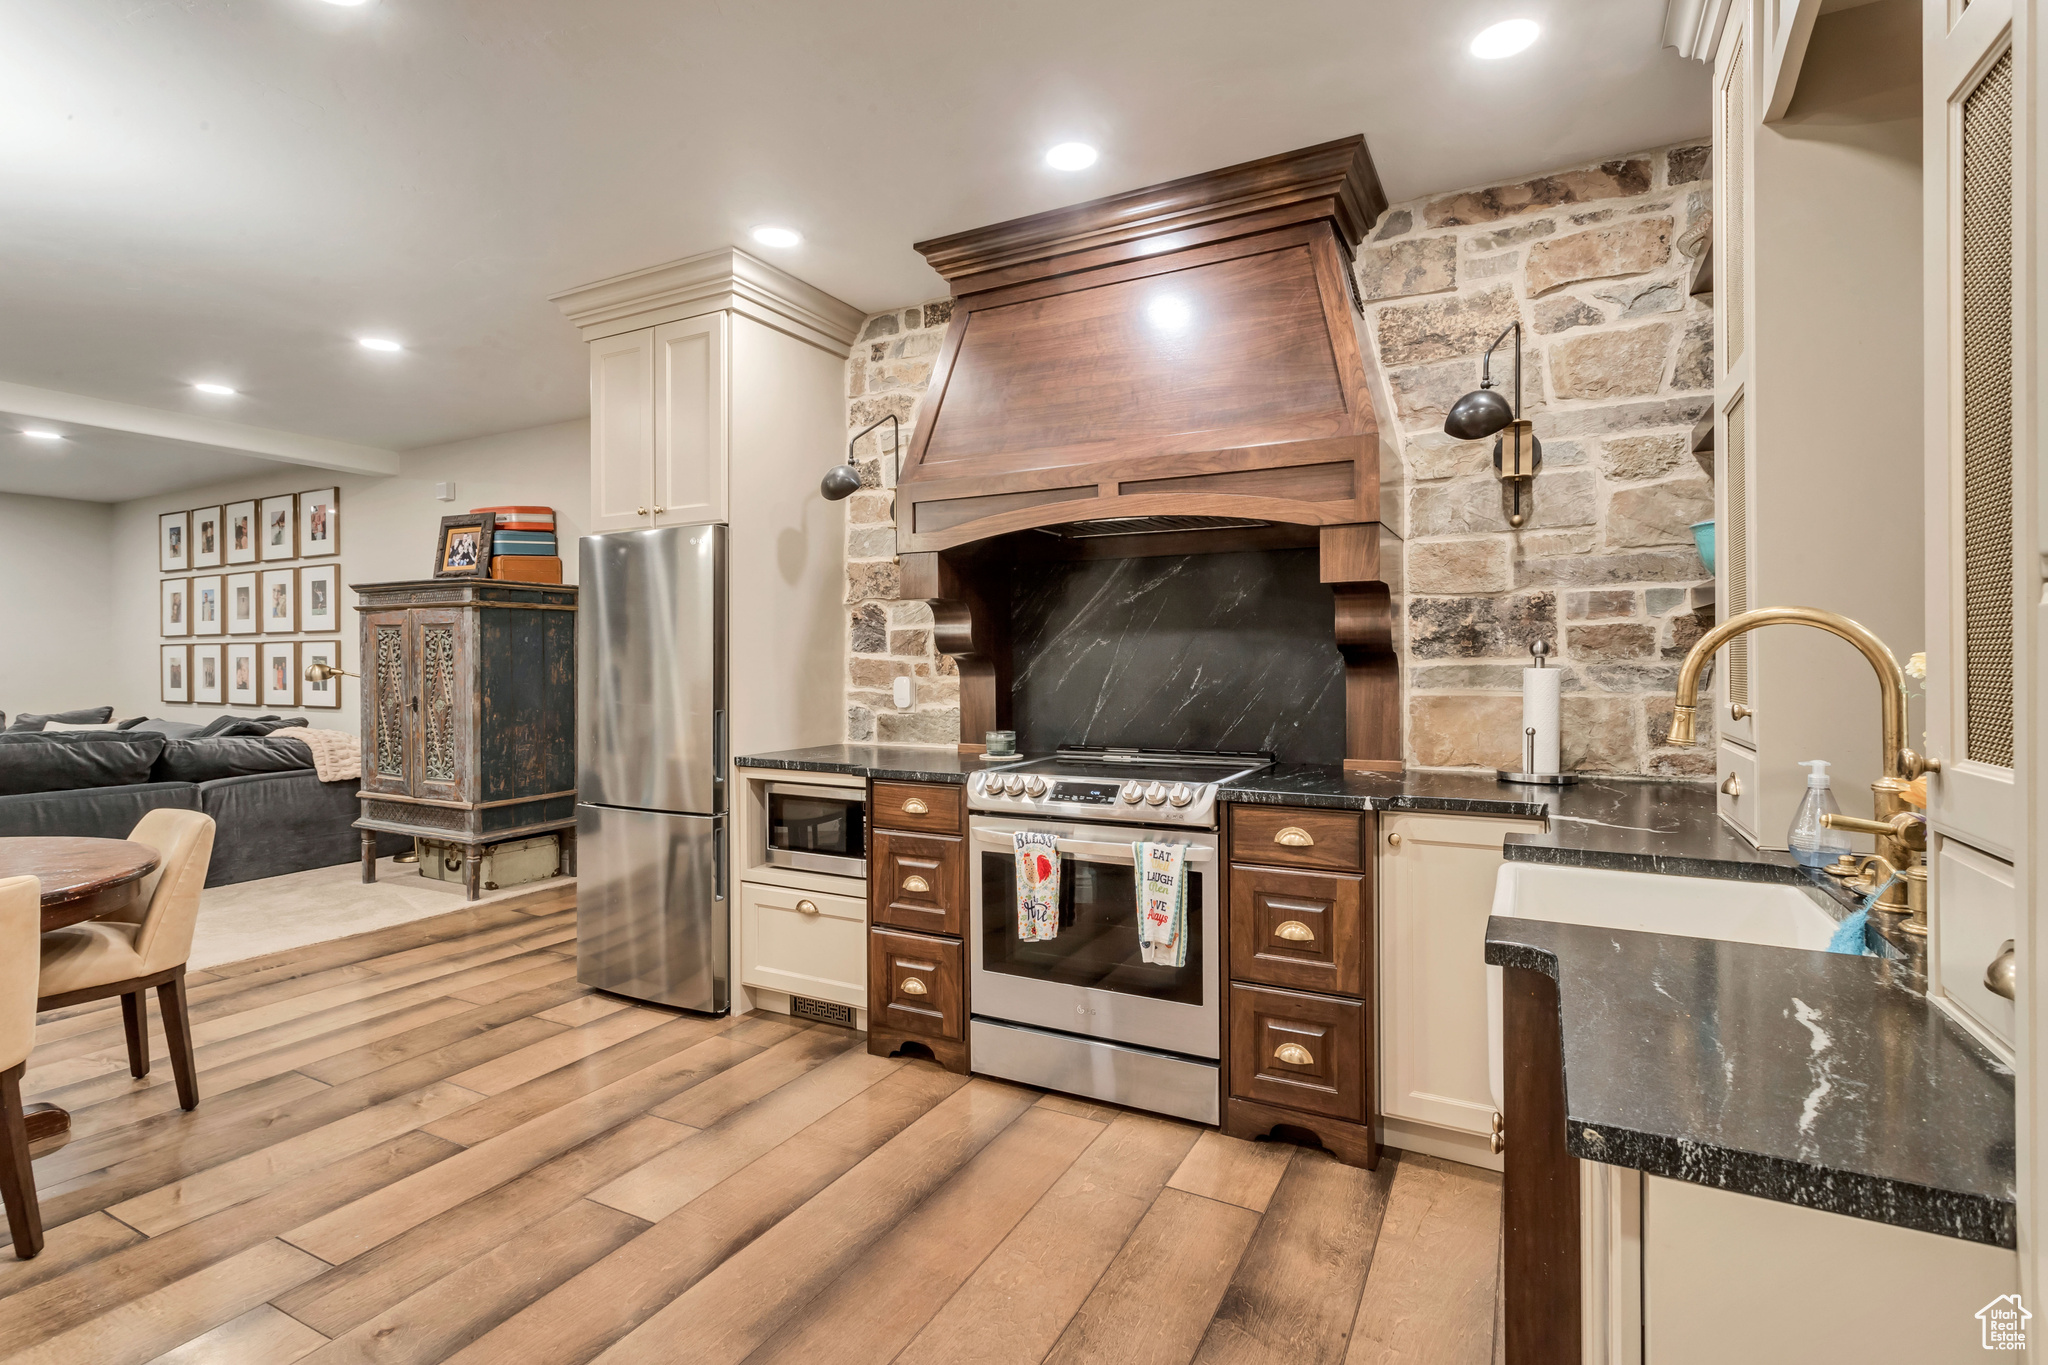 Kitchen with light hardwood / wood floors, custom range hood, sink, stainless steel appliances, and dark stone countertops